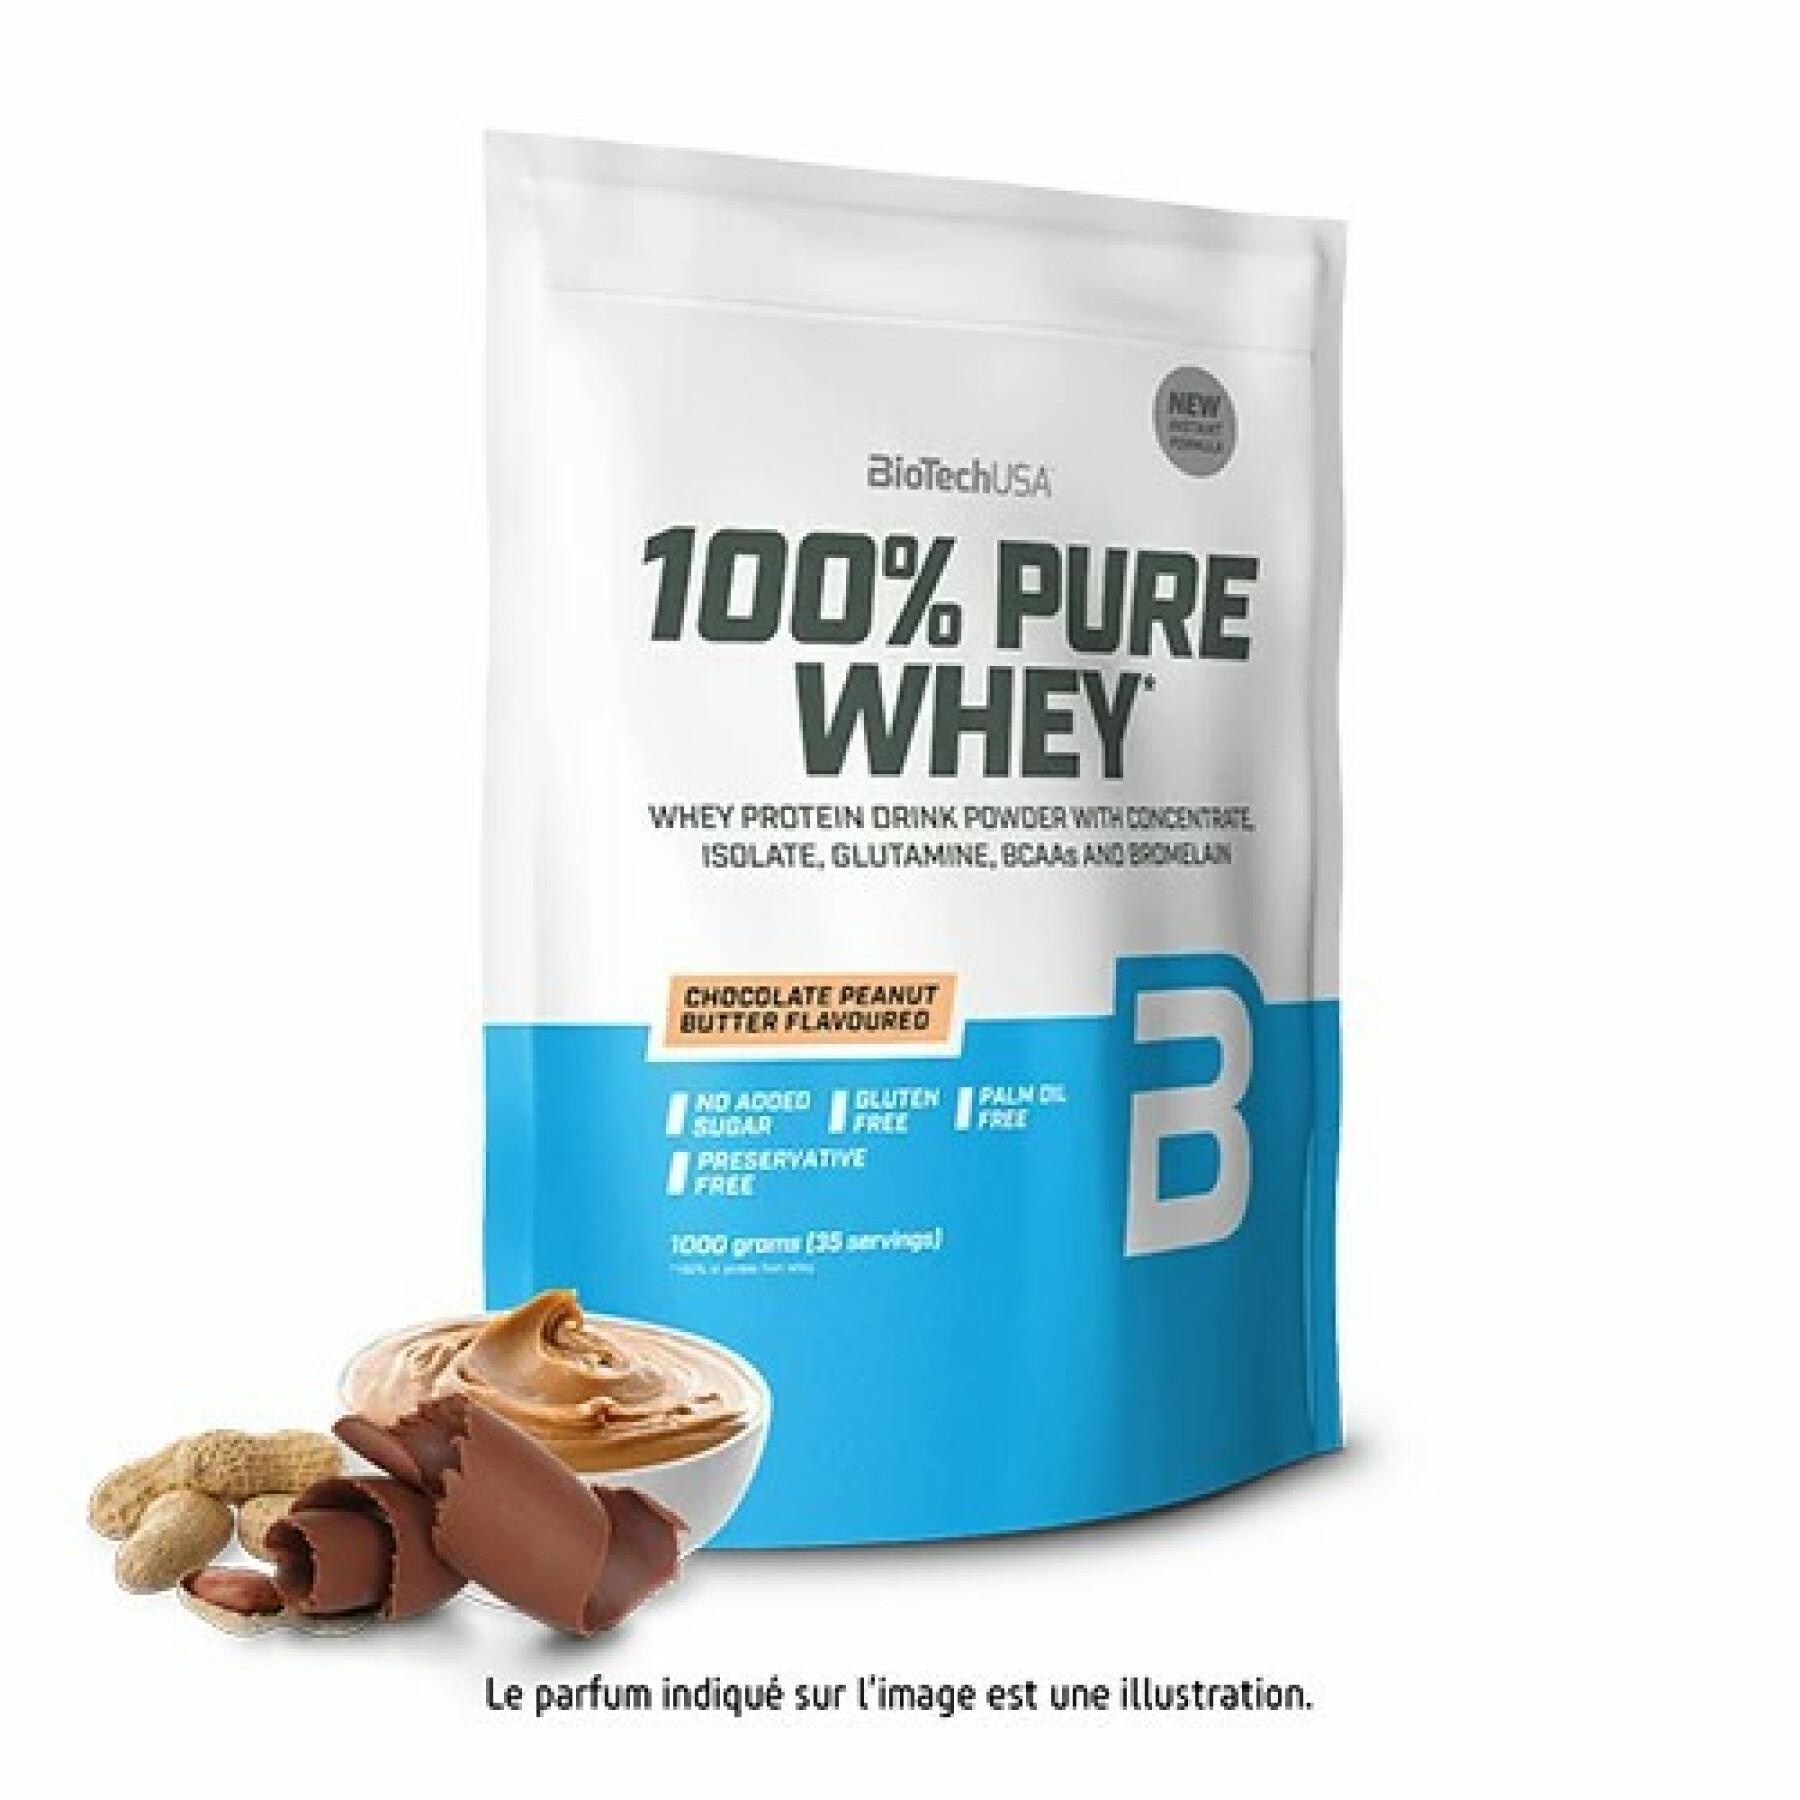 Paquete de 10 bolsas de proteína de suero 100% pura Biotech USA - Caramel-cappuccino - 1kg